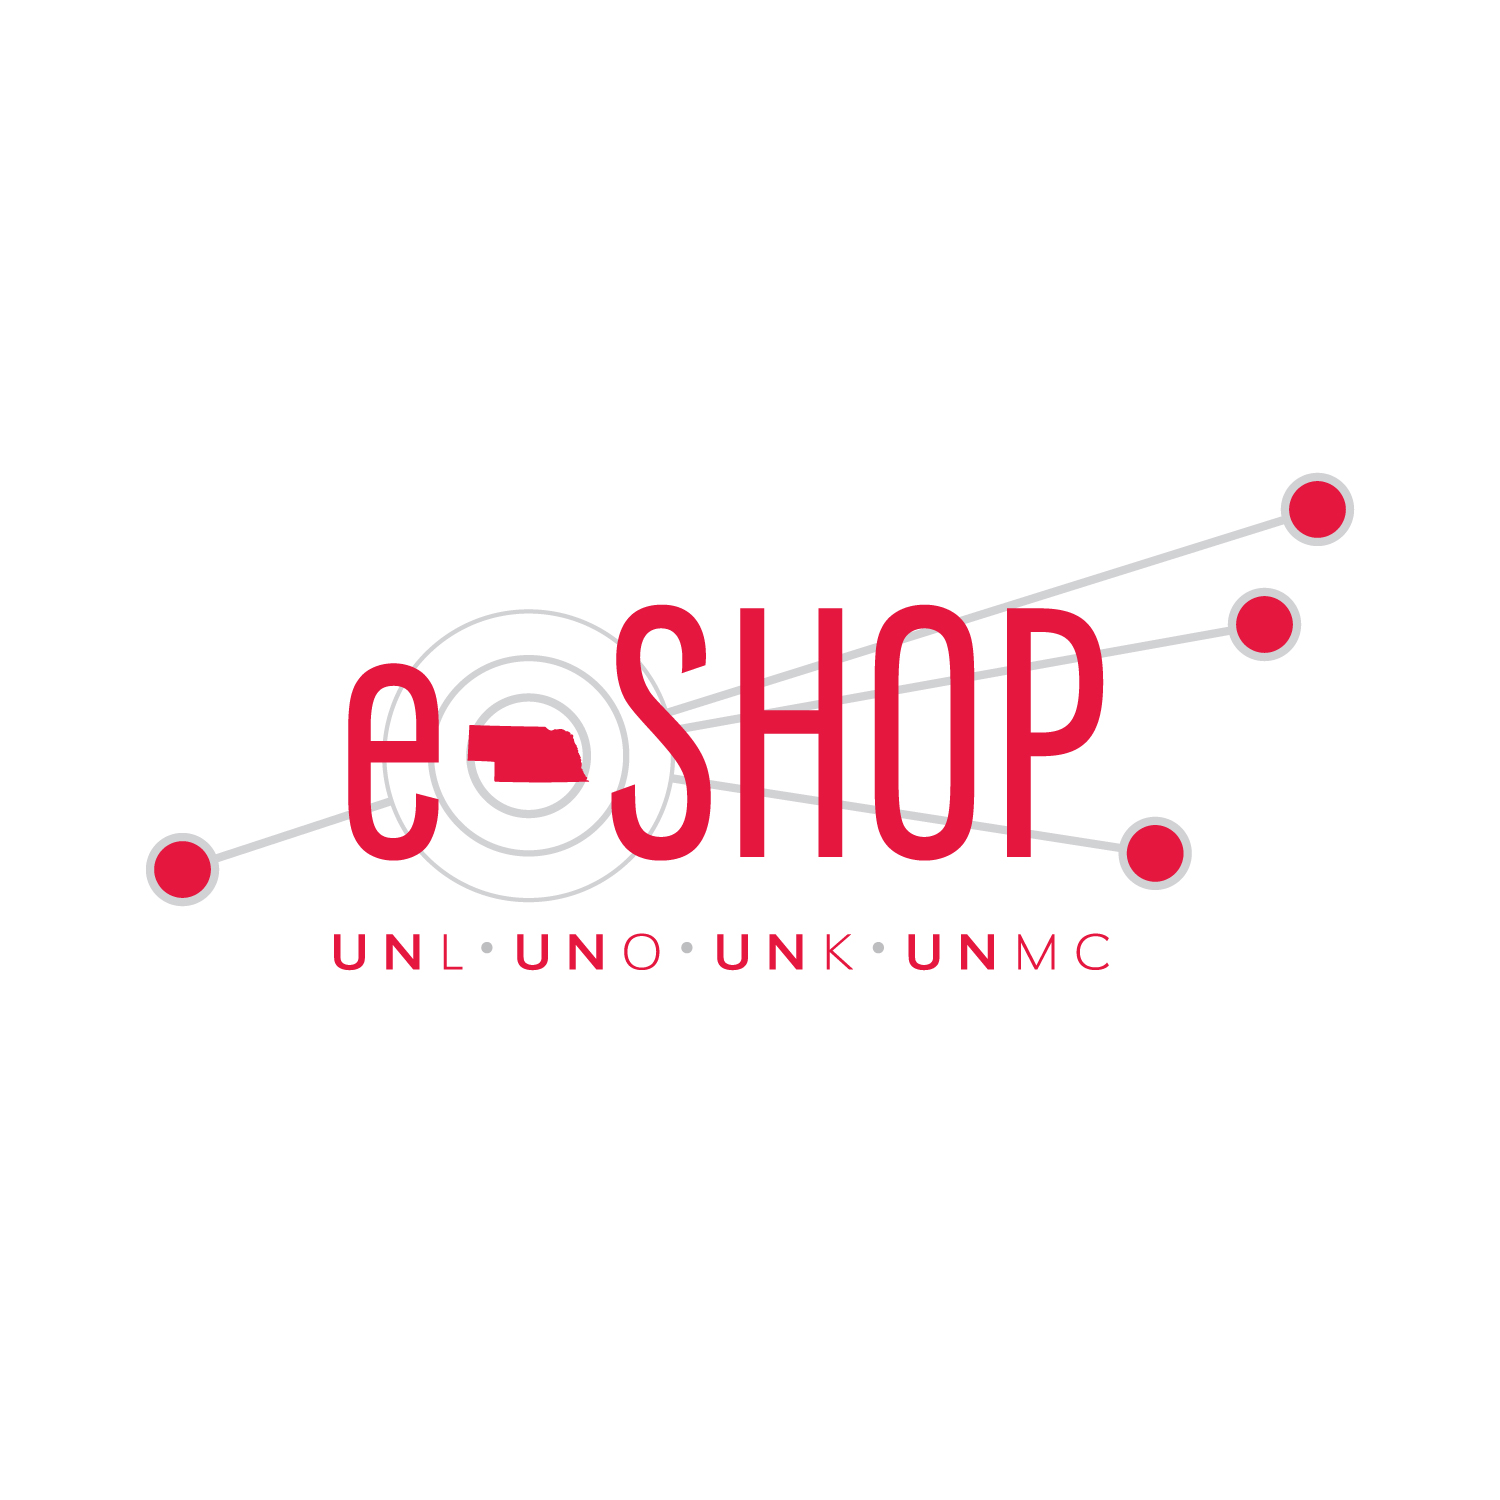 e-SHOP Logo_final-05.jpg